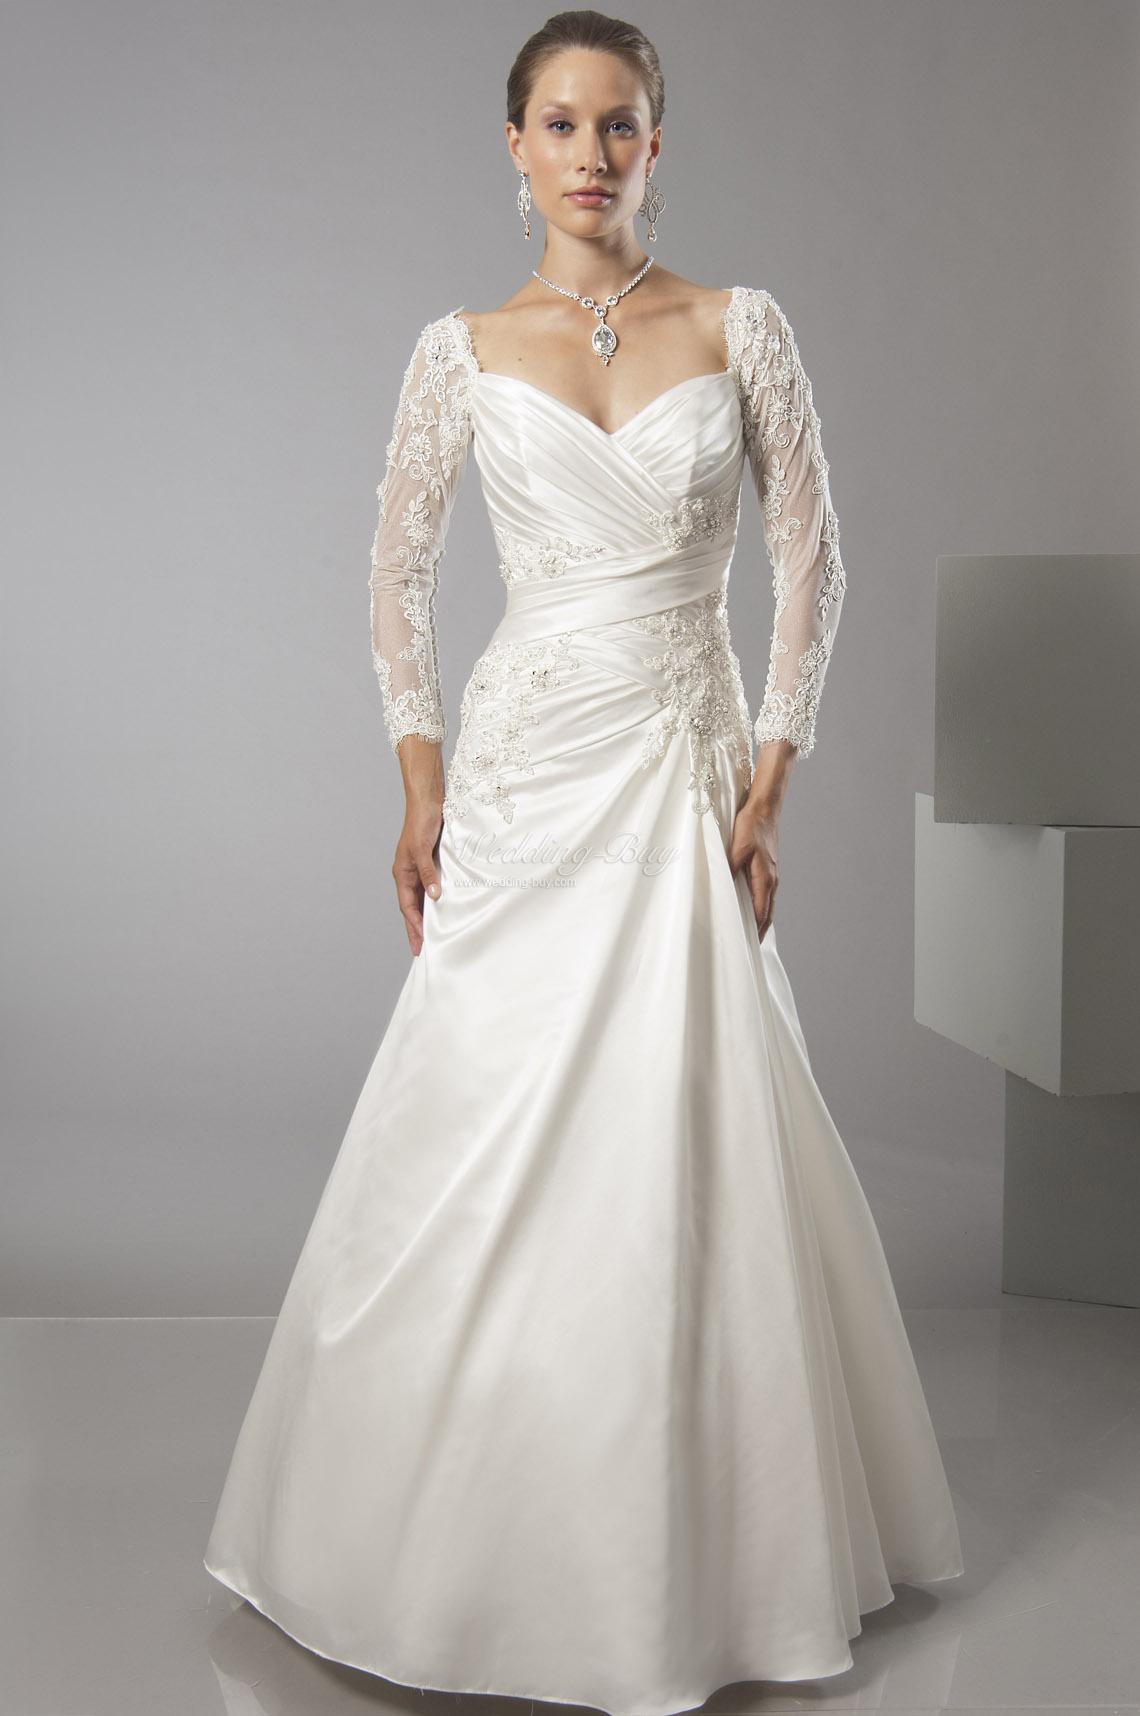 25 Simple Wedding Dresses Ideas Wohh Wedding 6669